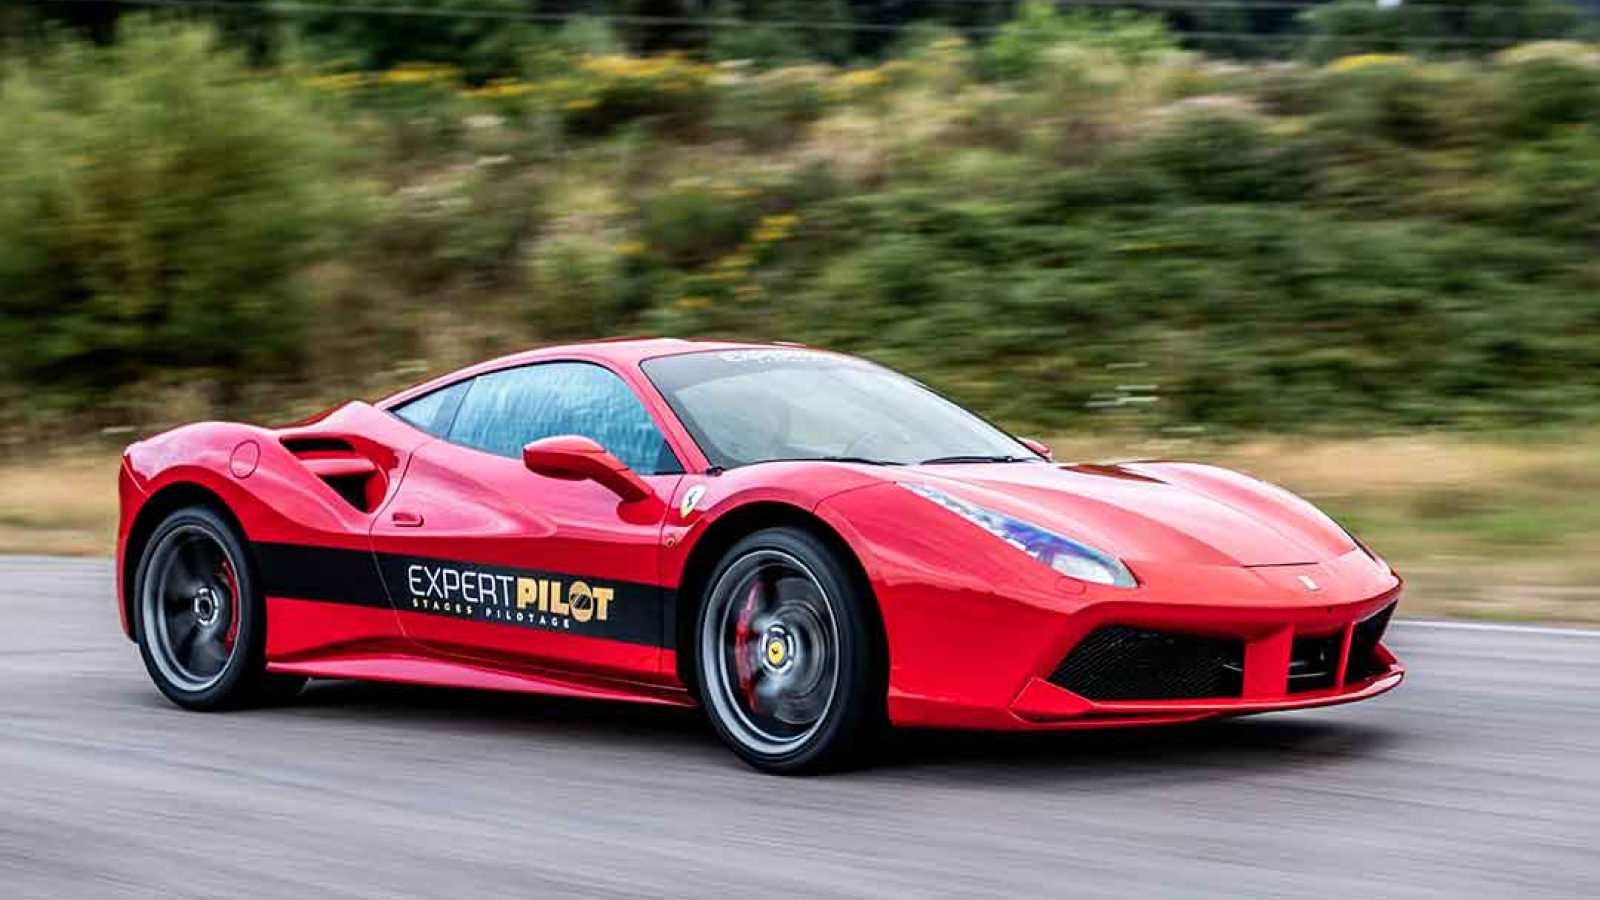 Ferrari tour of the Portes du Soleil